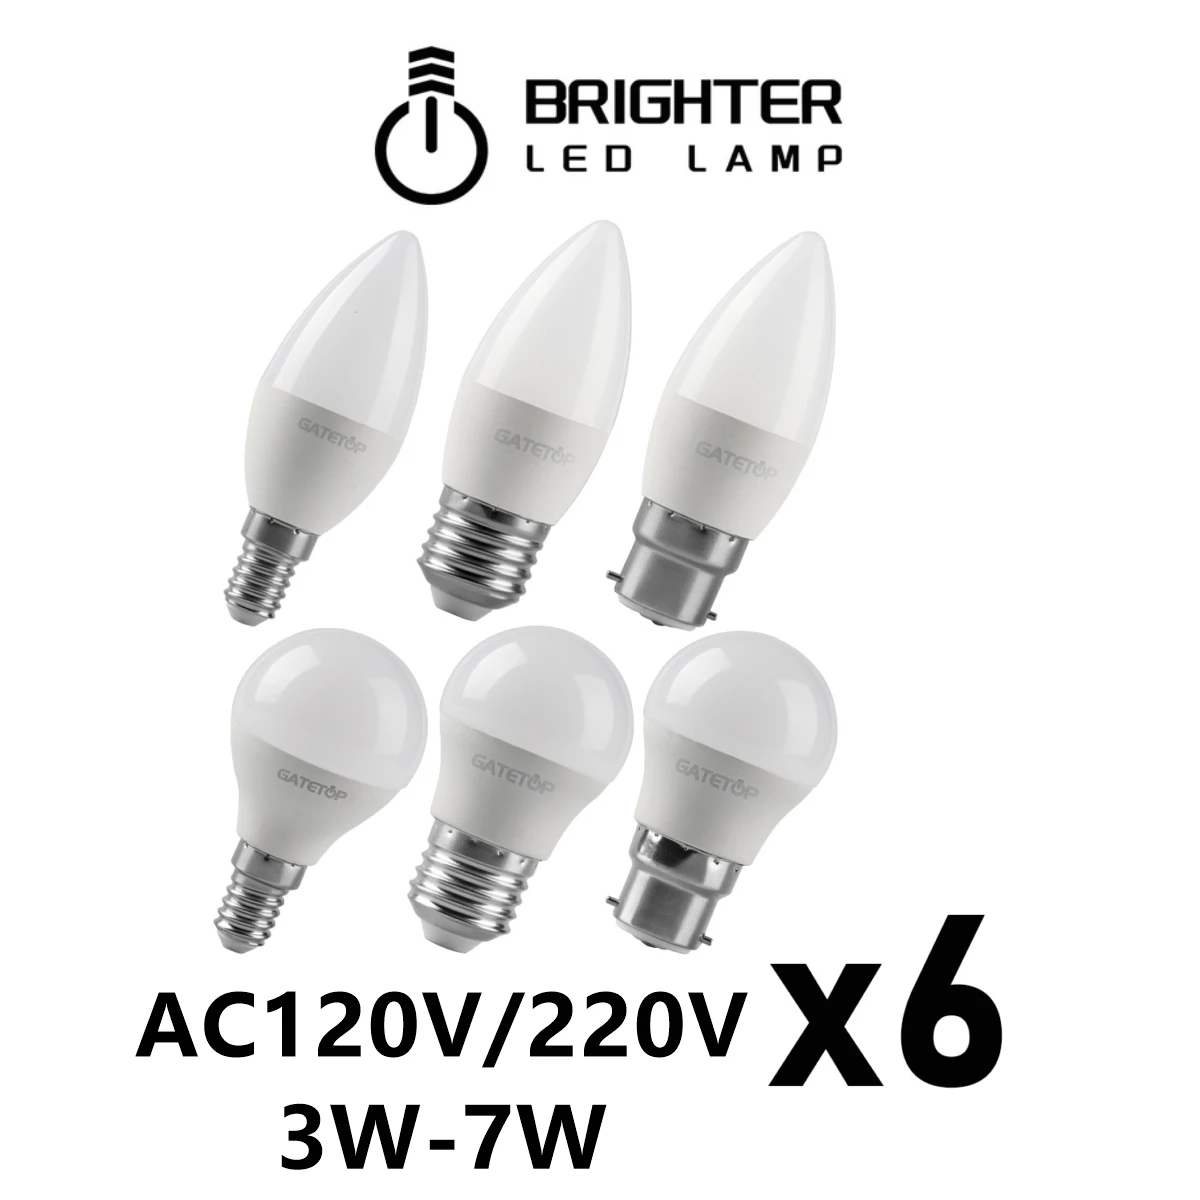 

LED candle light mini bulb light AC120V 220V E27 E14 B22 no strobe warm white light 3W-7W is suitable for home office lighting